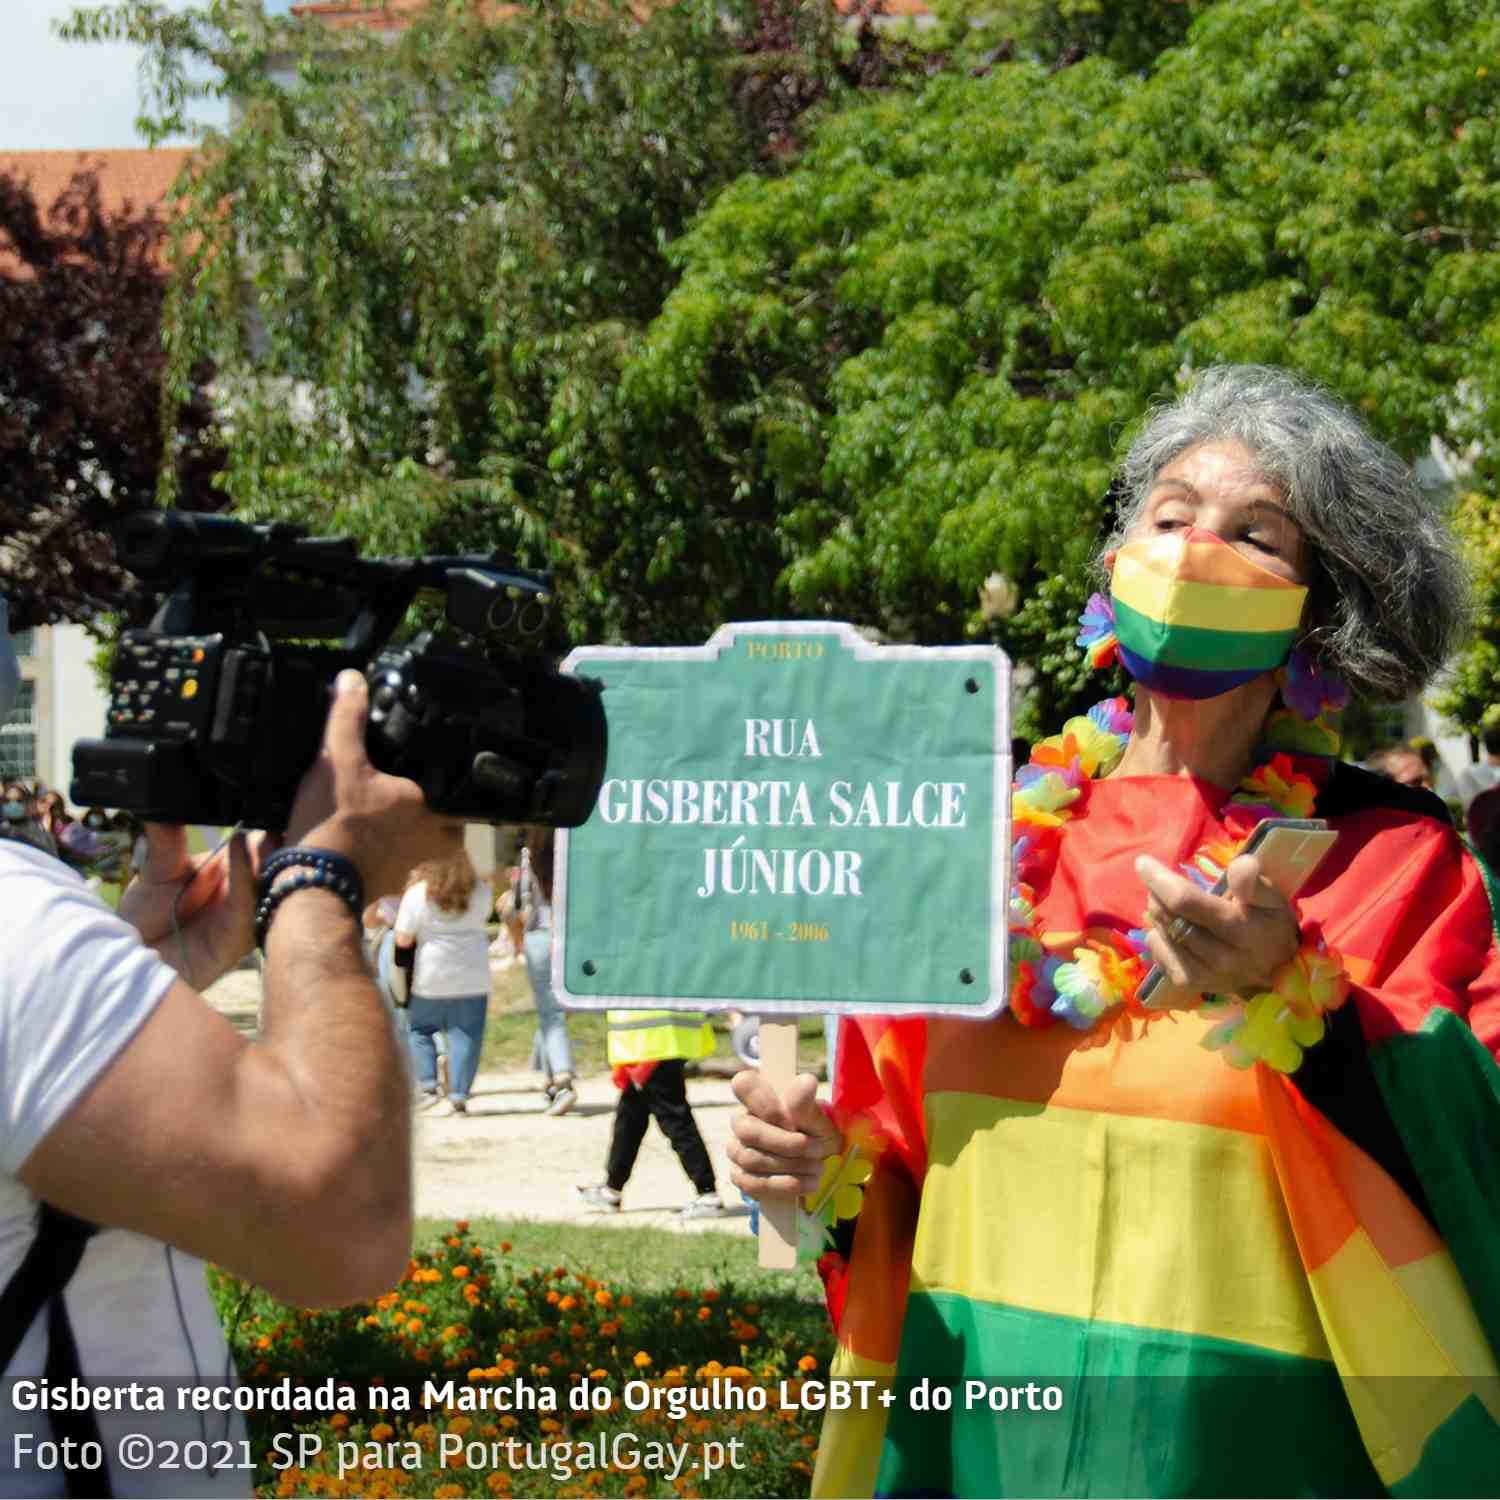 PORTUGAL: Gisberta proposta para nome de rua, numa longa lista de espera